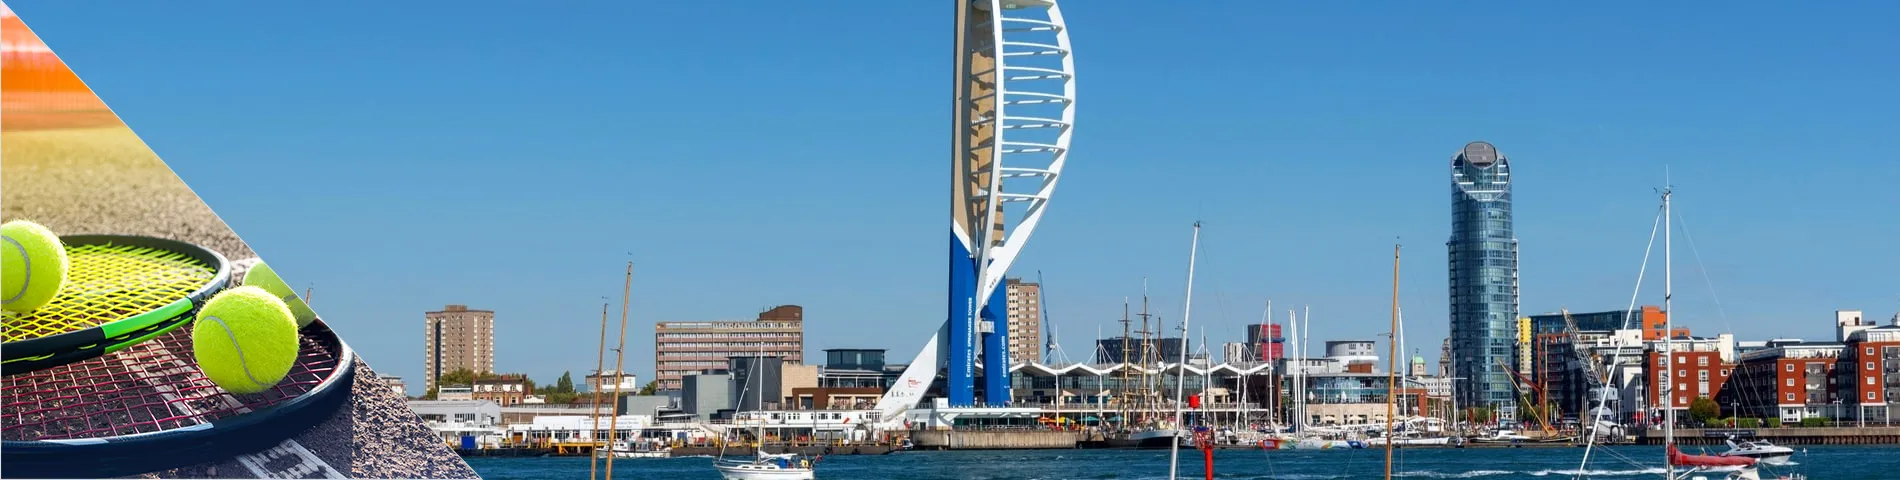 Portsmouth - Angličtina a tenis